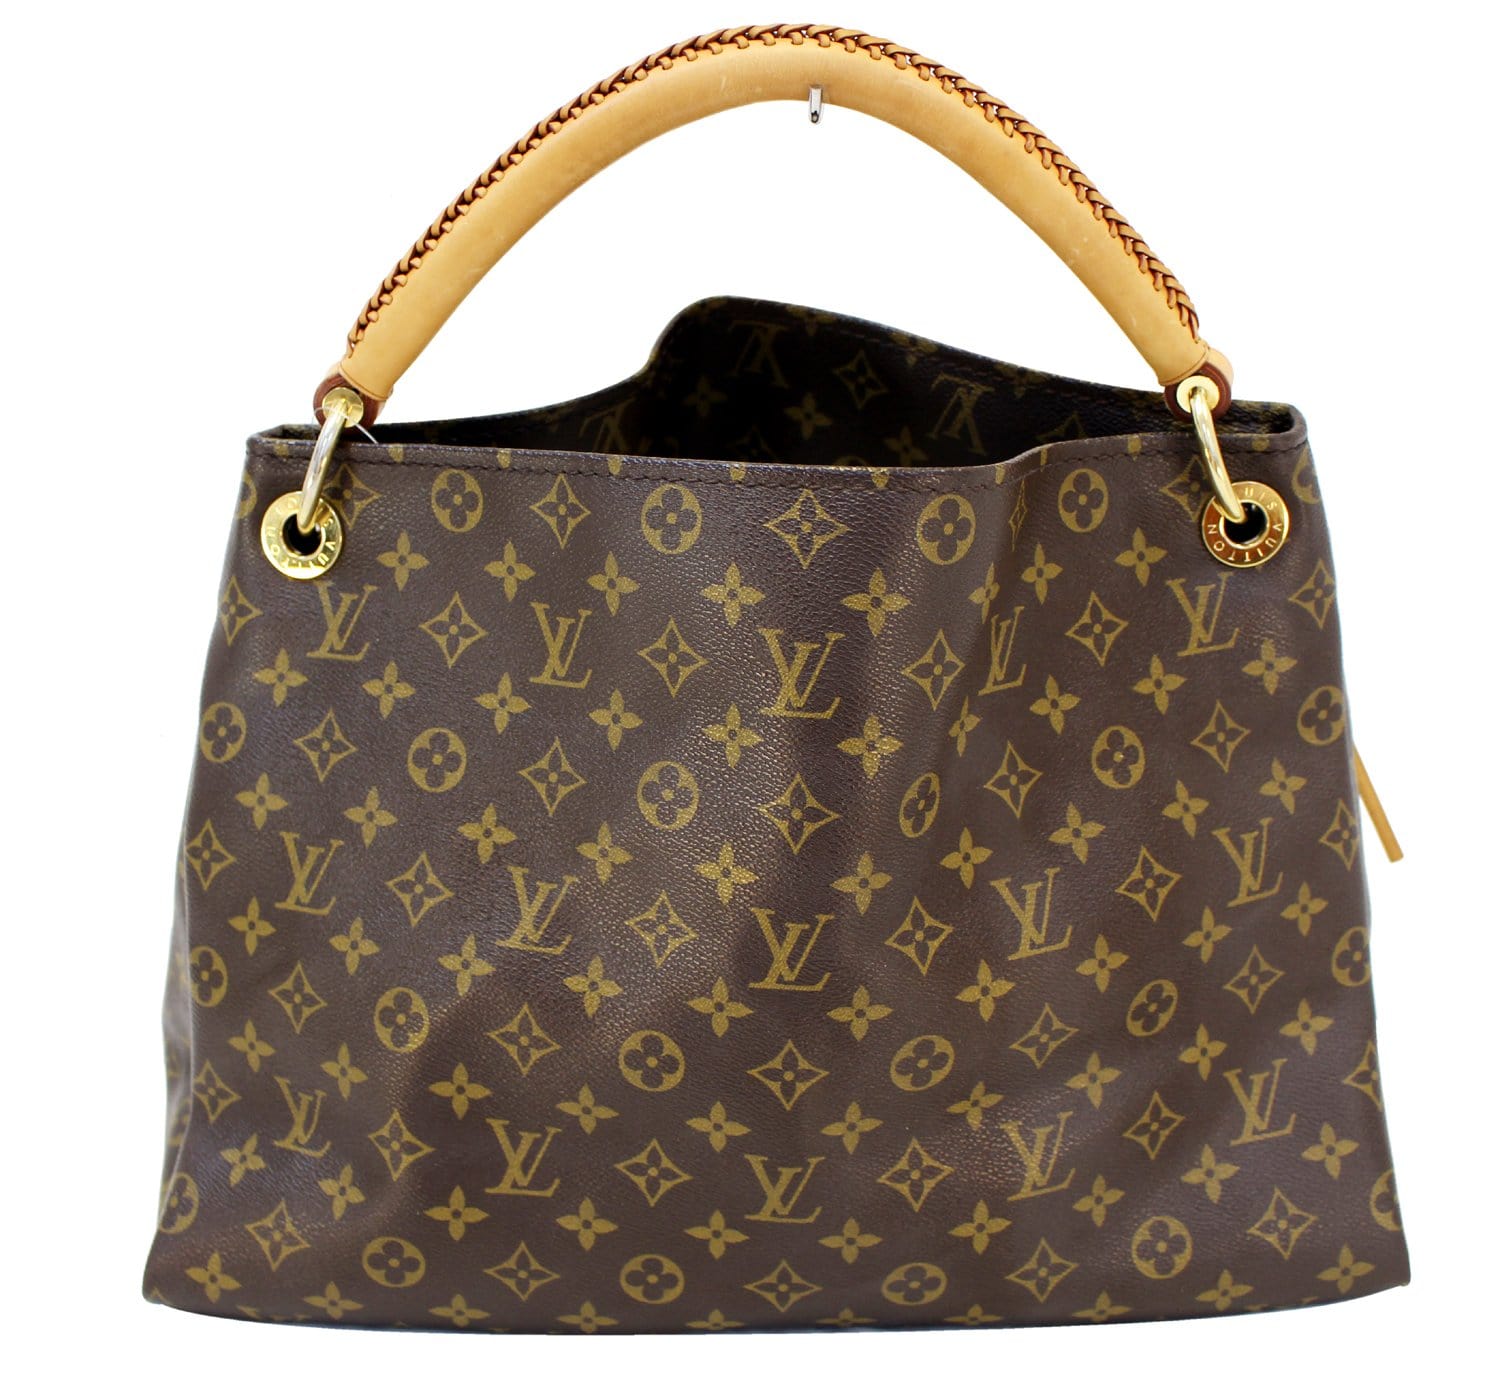 Louis Vuitton Artsy Mm Tote Bag